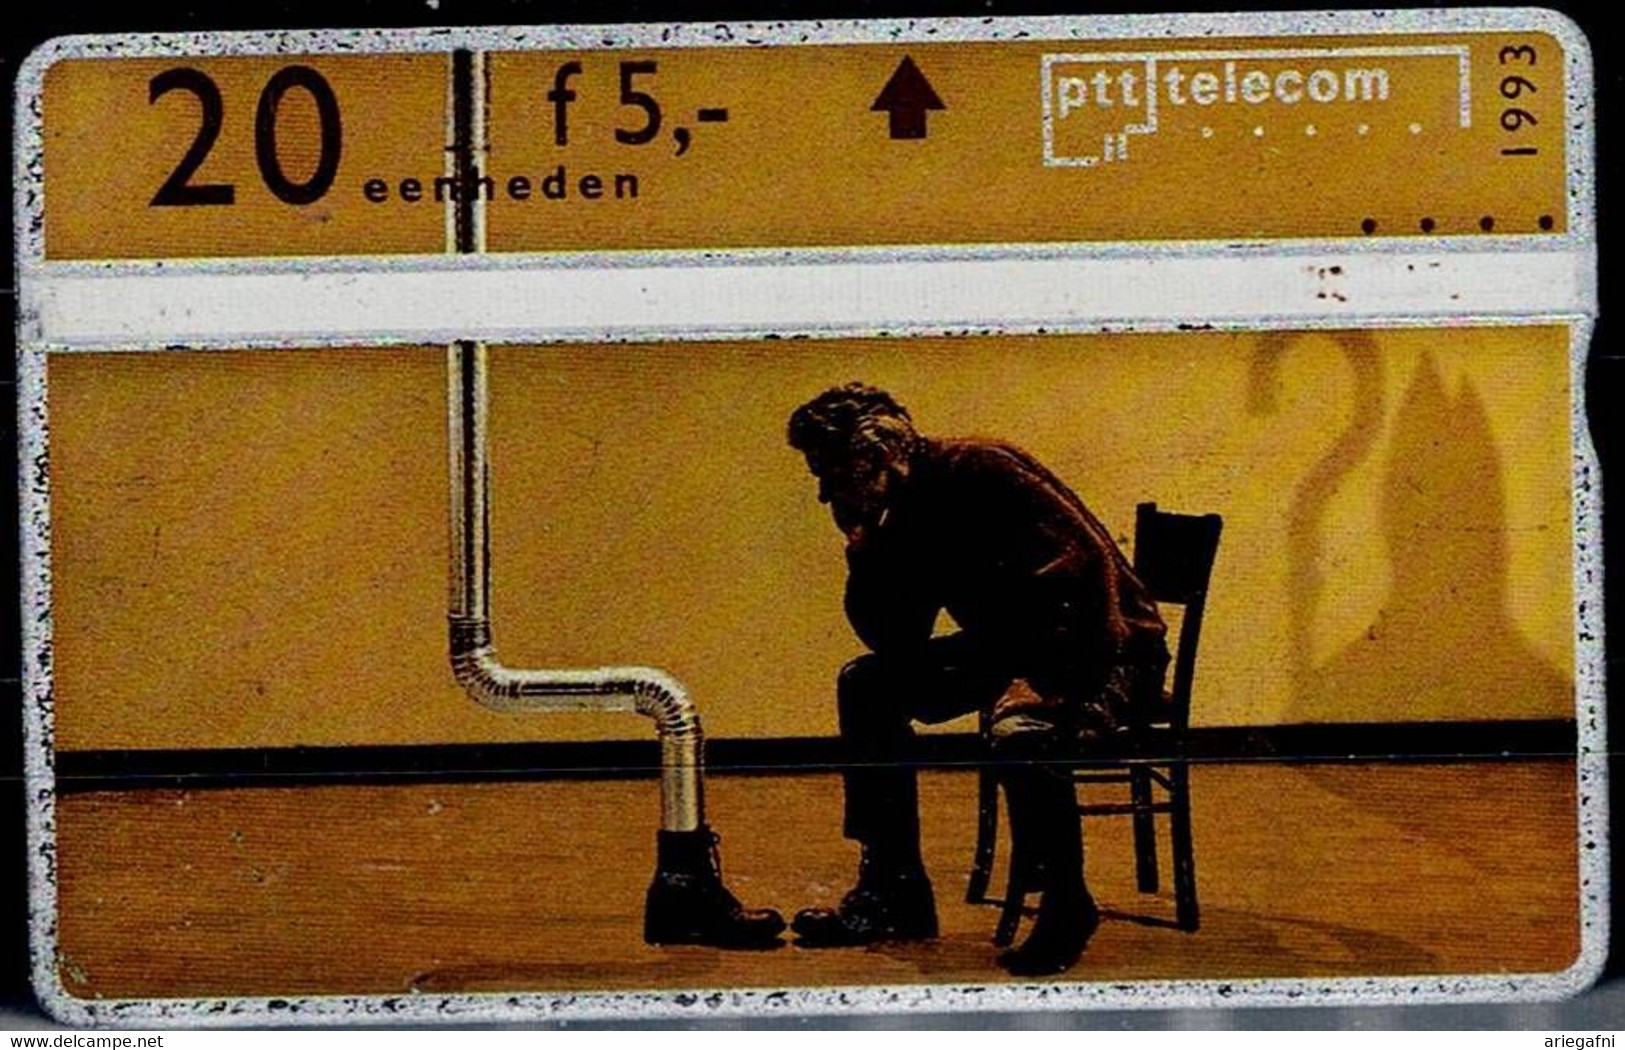 NETHERLANDS 1994 PHONECARD THINKER USED VF!! - öffentlich